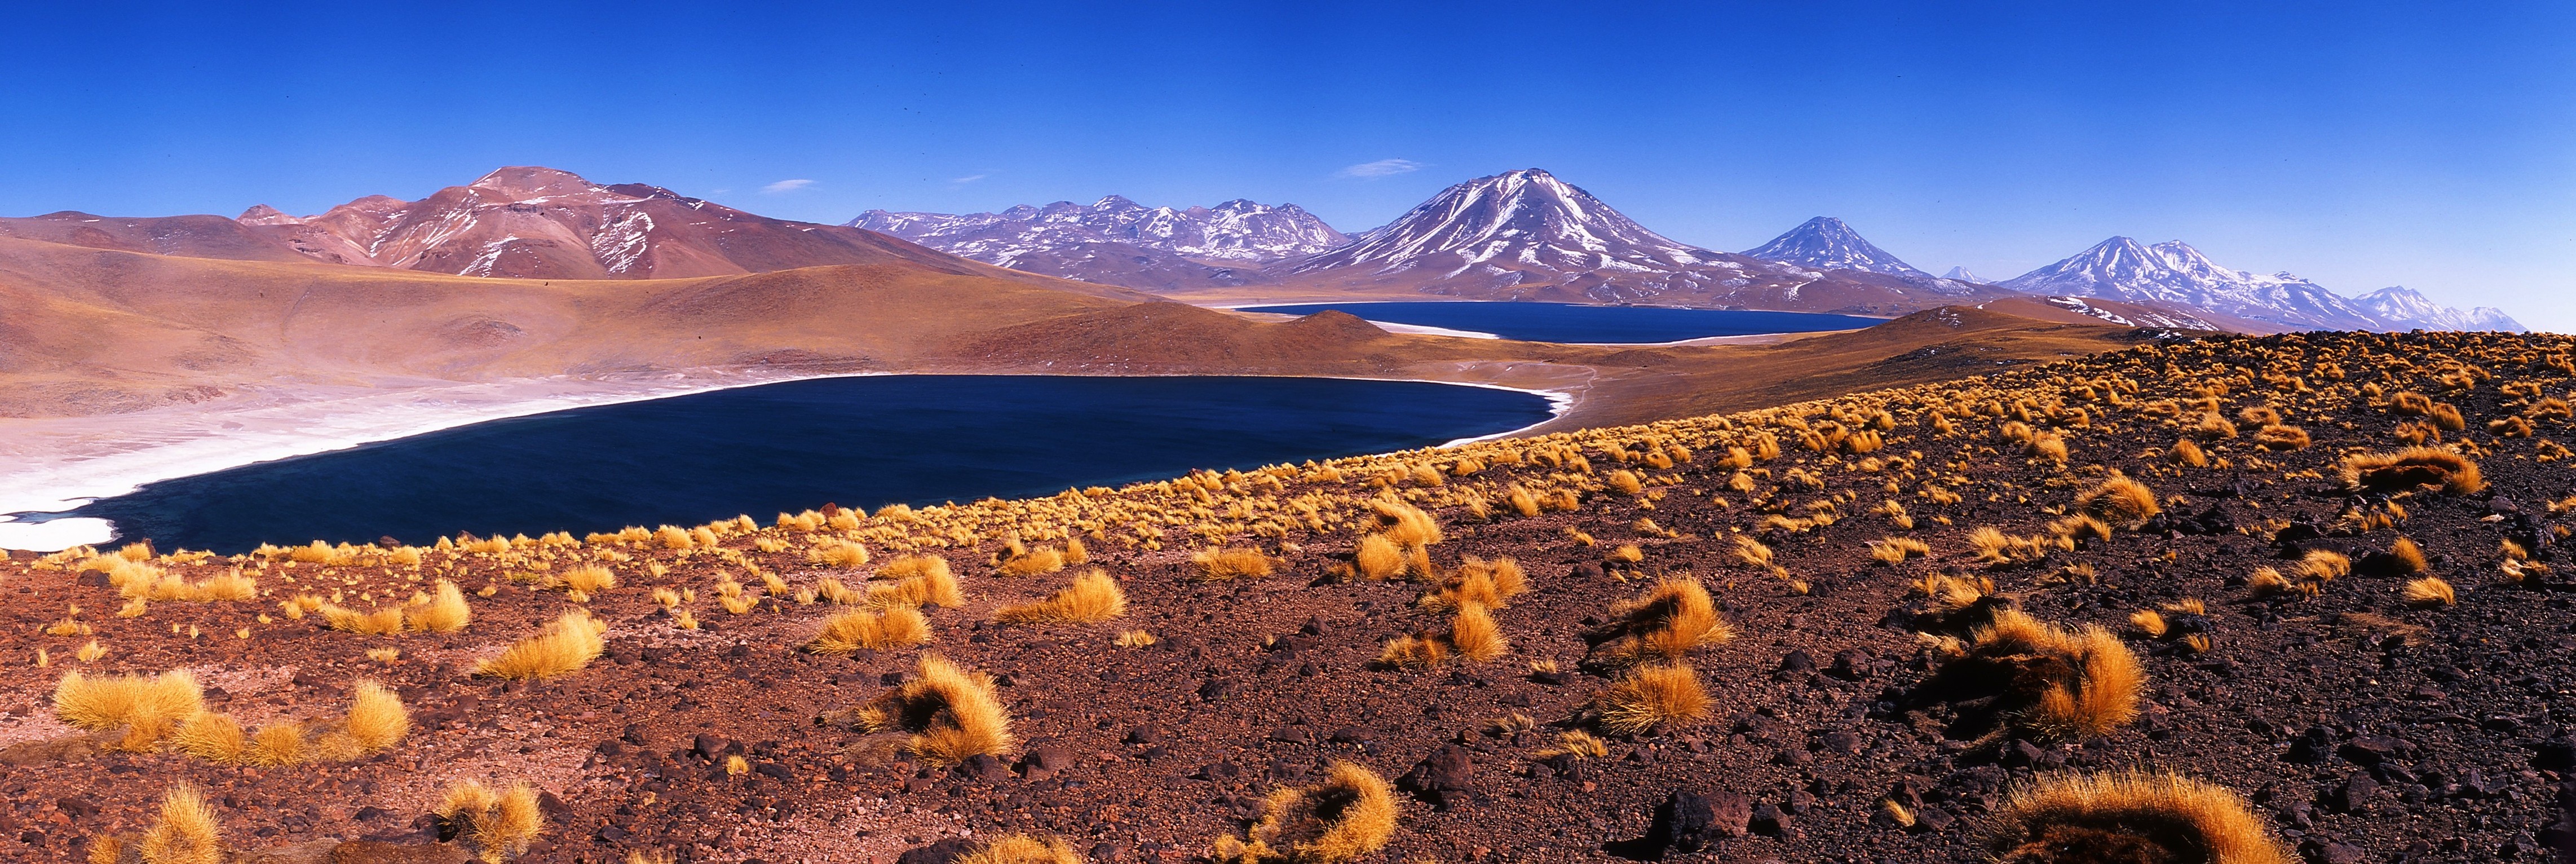 panoramas, Desert, Mountain, Chile, Dry Grass, Nature, Landscape, Blue, Yellow, Snowy Peak Wallpaper